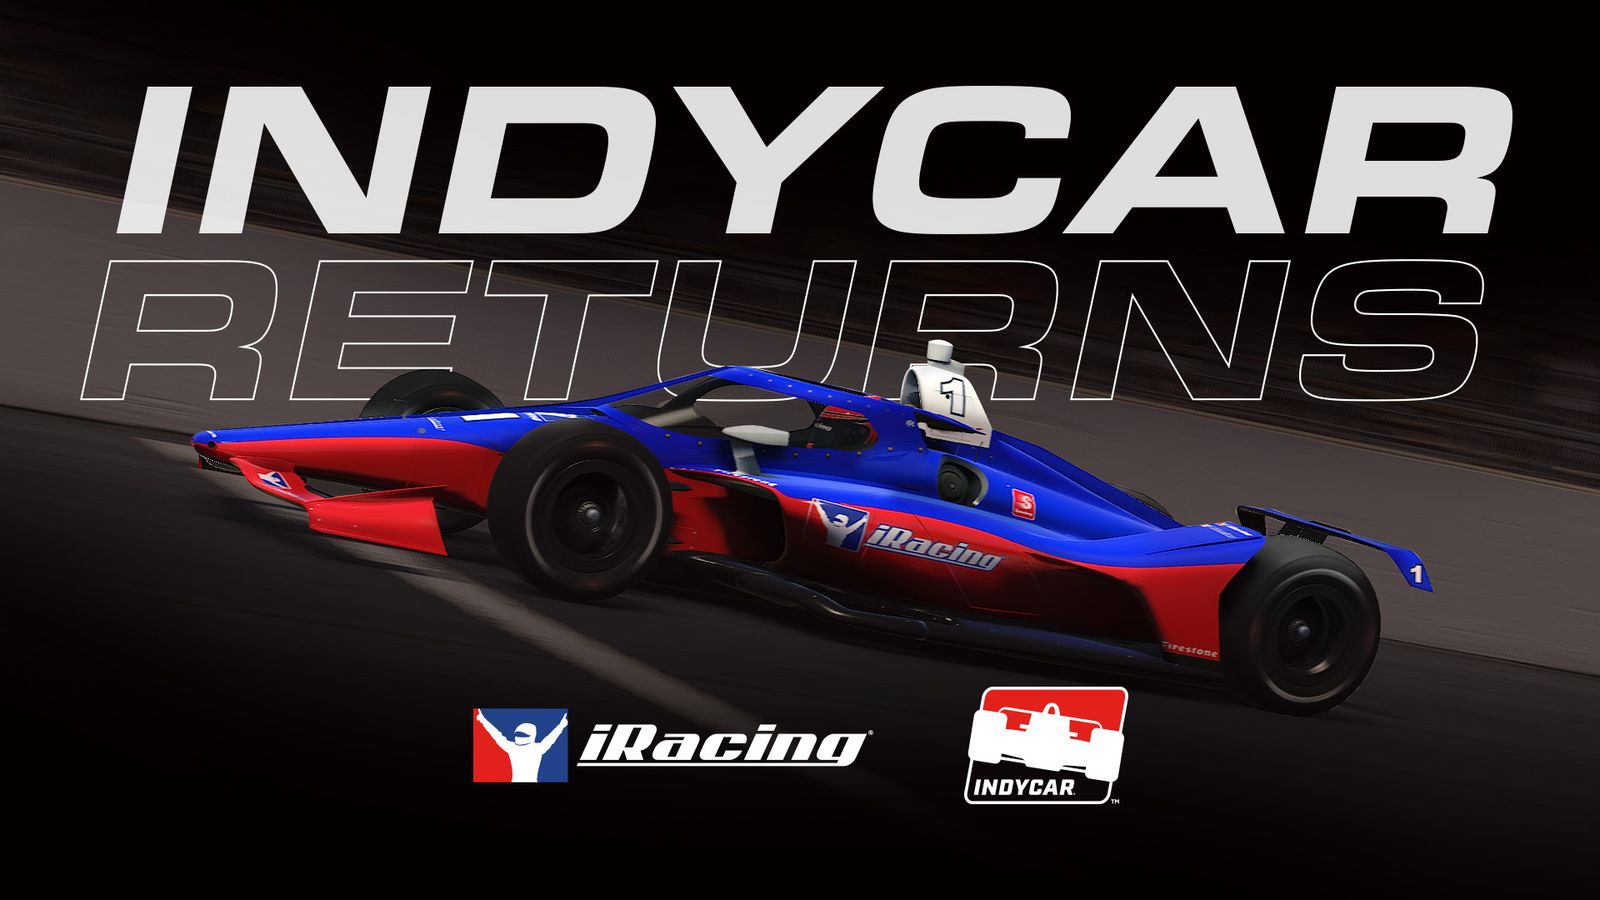 IndyCar returns to iRacing